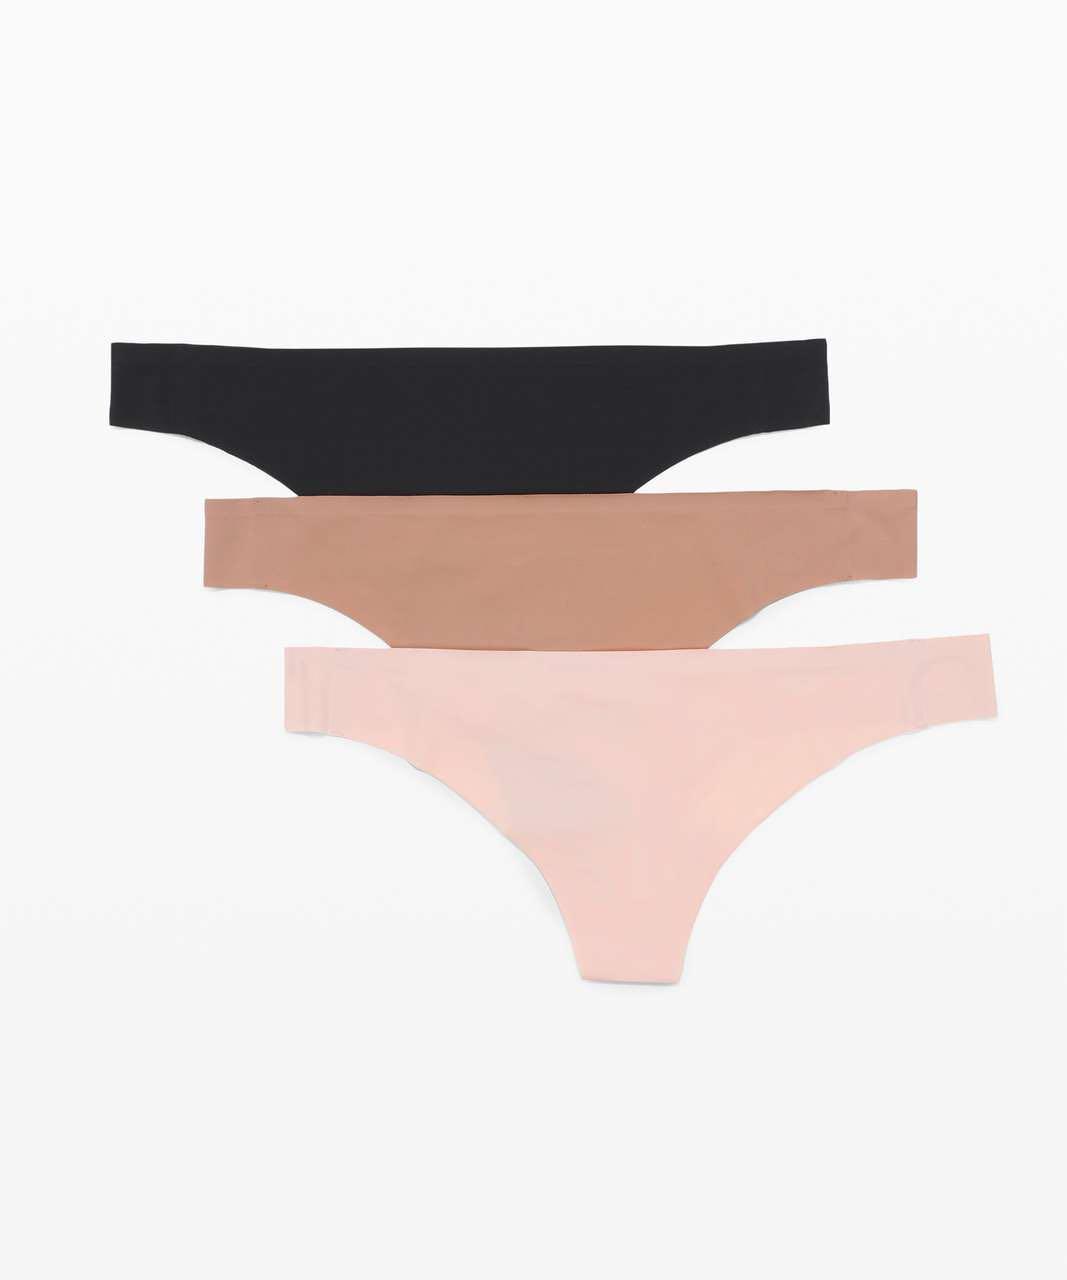 Lululemon BNIB Smooth Seamless Thong Underwear - Black, Women's